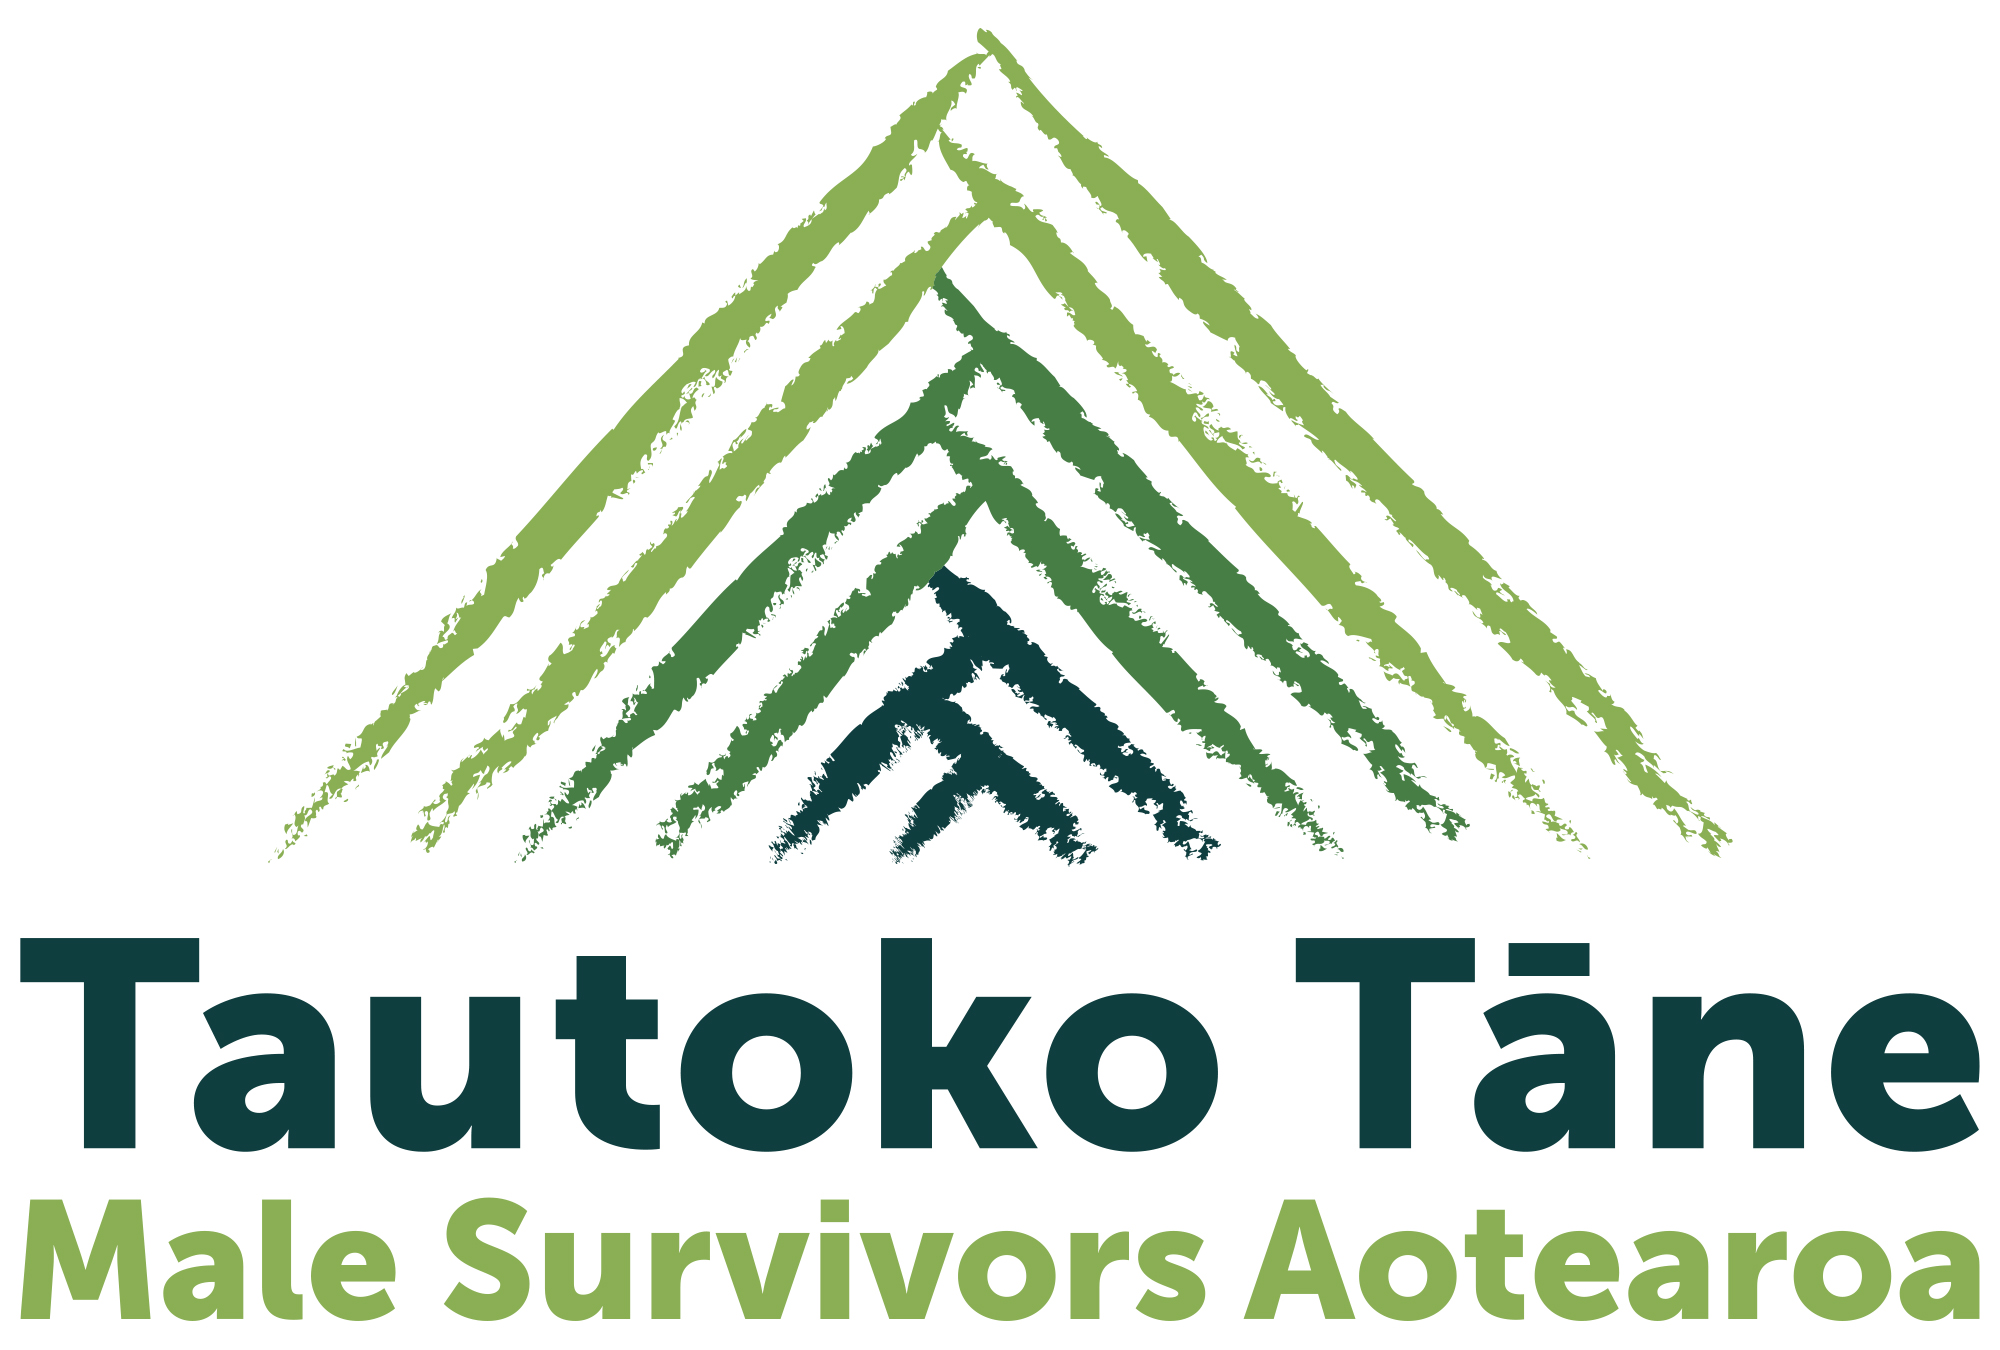 Tautoko Tāne Male Survivors Aotearoa